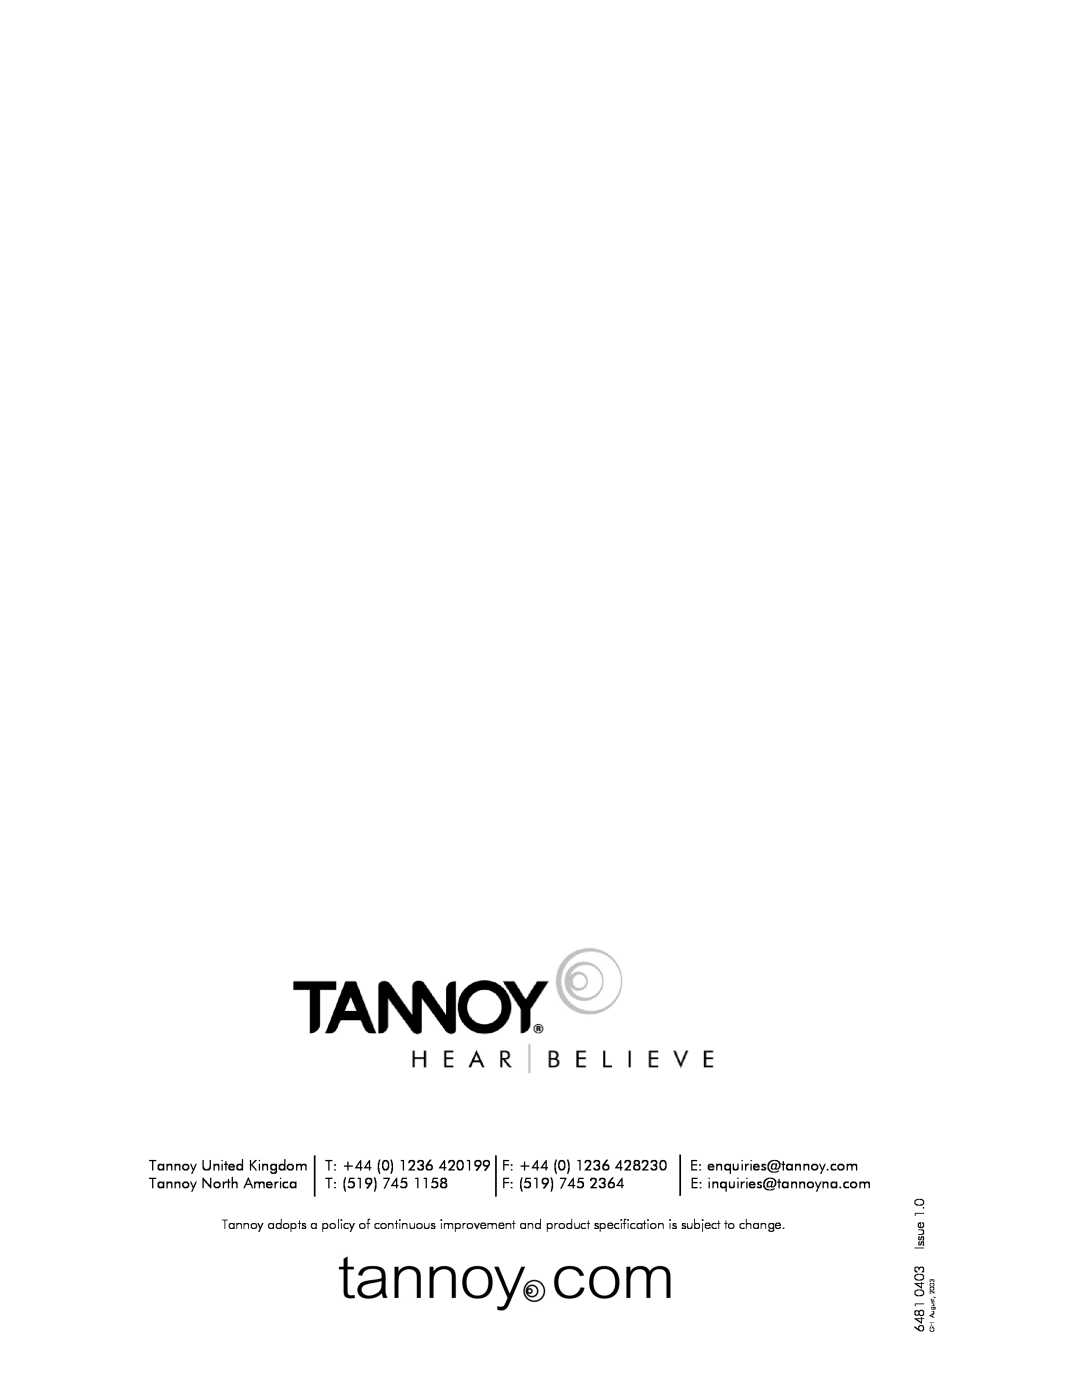 Tannoy V12HP Tannoy United Kingdom, T: +44 0 1236, F: +44 0 1236, E: enquiries@tannoy.com, Tannoy North America, GH August 